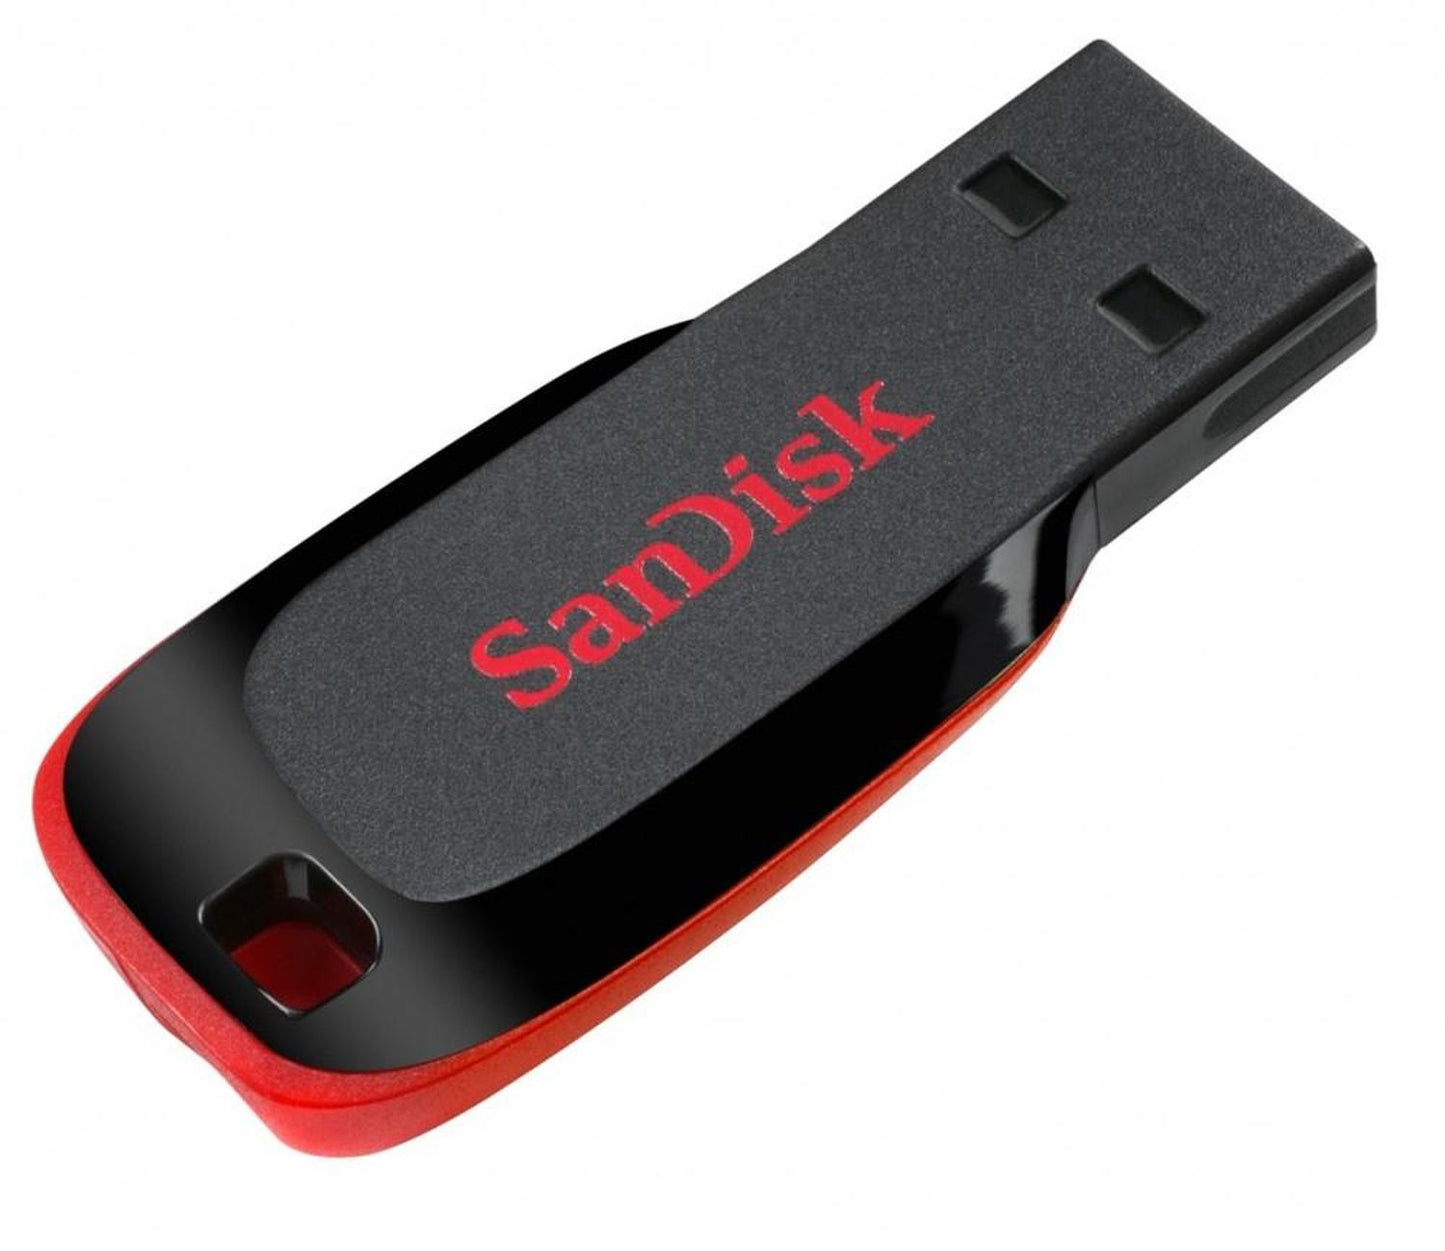 Memoria USB SanDisk Cruzer Blade CZ50, 16GB, USB 2.0, Negro/Rojo